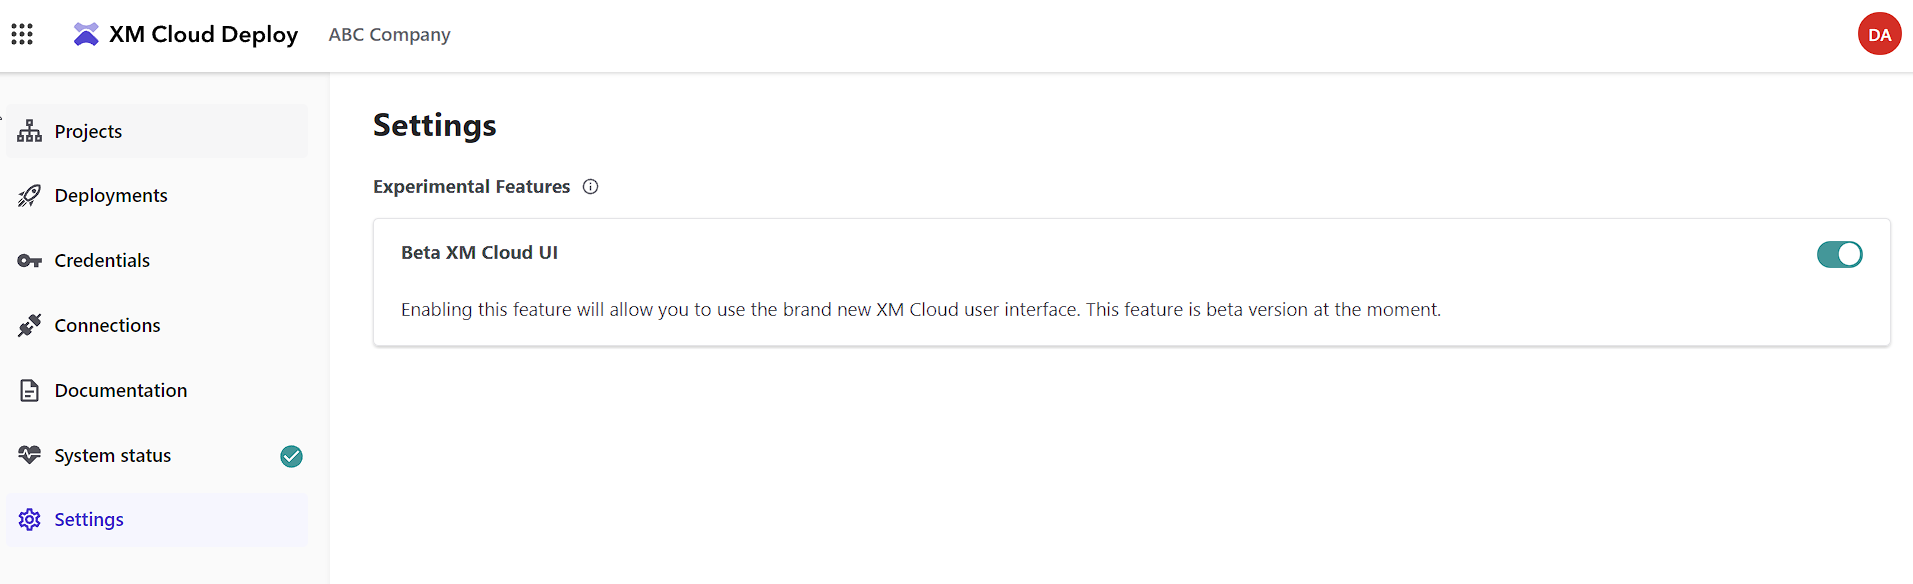 Sitecore XM Cloud Deploy Beta User Interface Tour